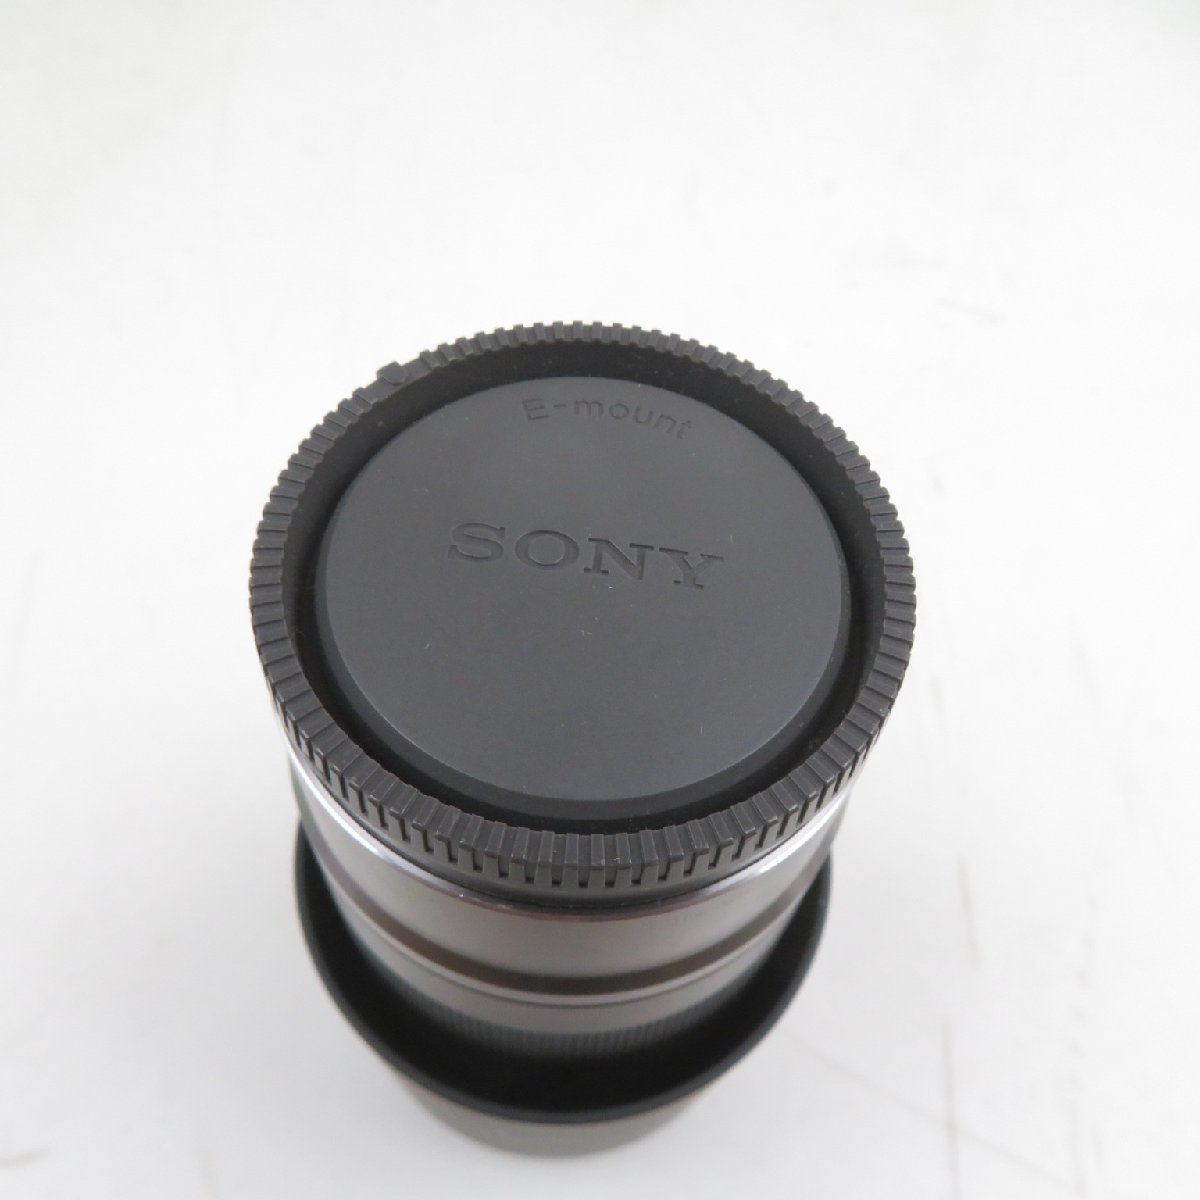 SONY ソニー E 4.5-6.3/5.5-210 OSS 1m/3.29ft φ49 SEL55210 カメラレンズ / 60 (SGAW013913D)_画像8